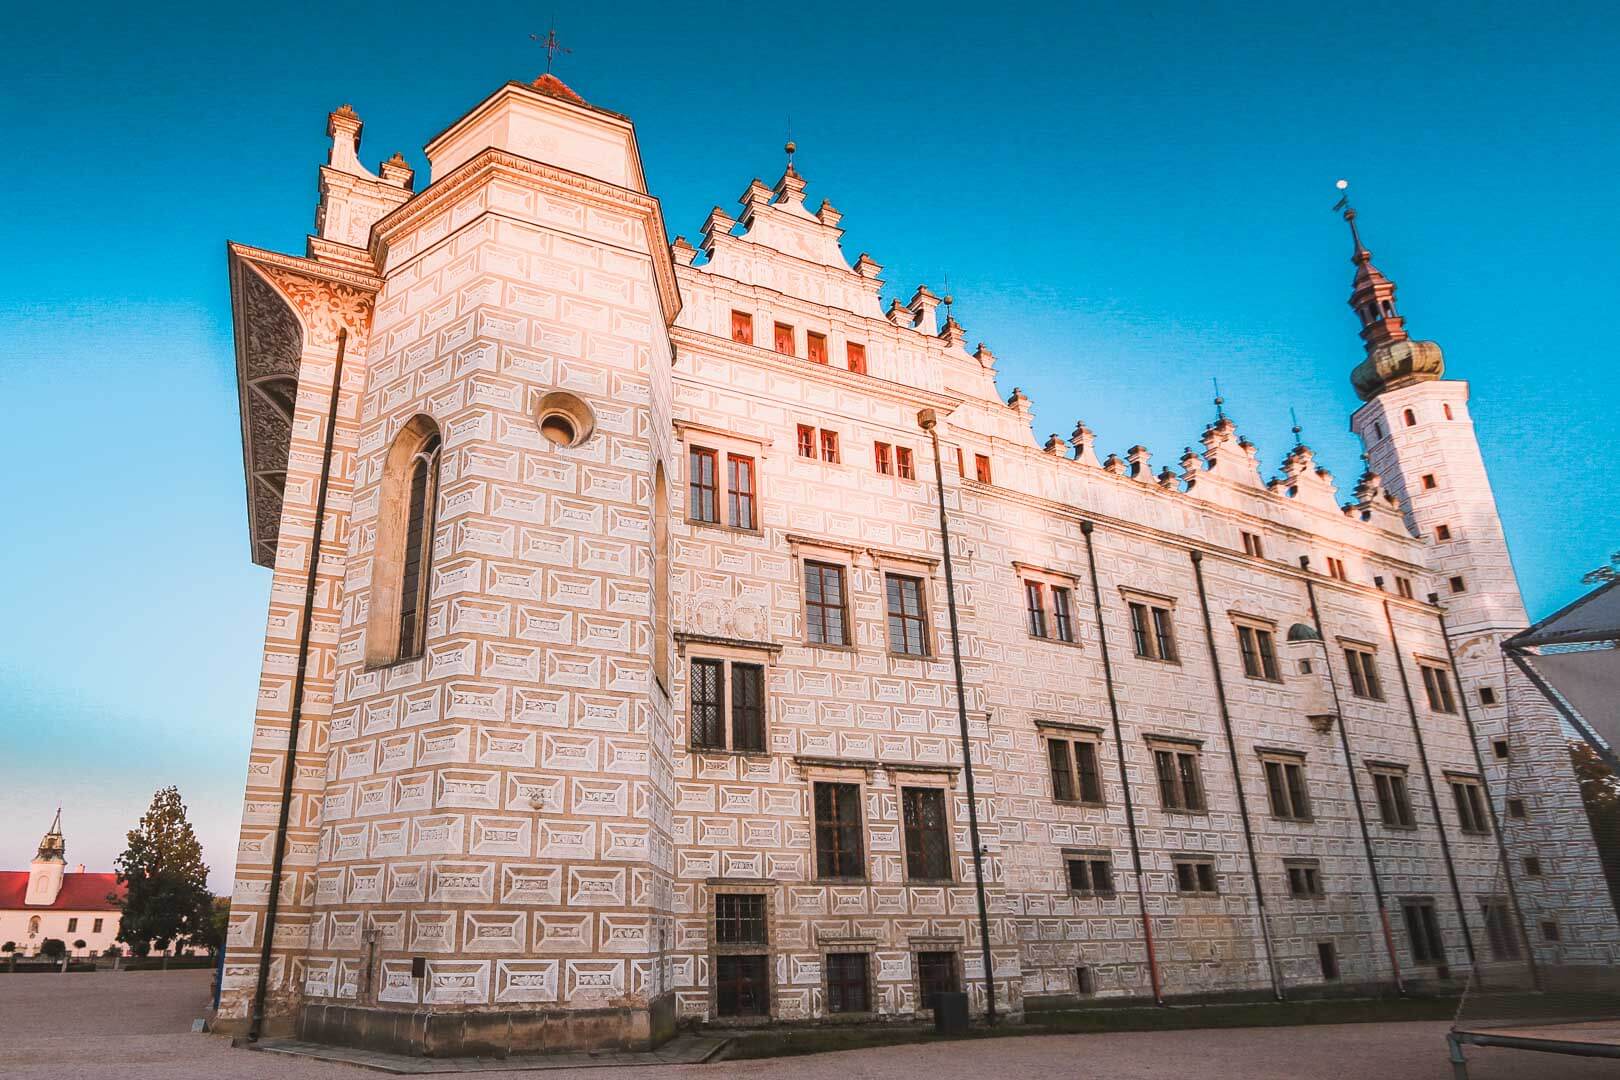 Litomysl castle - Visit Litomysl in Czech Republic